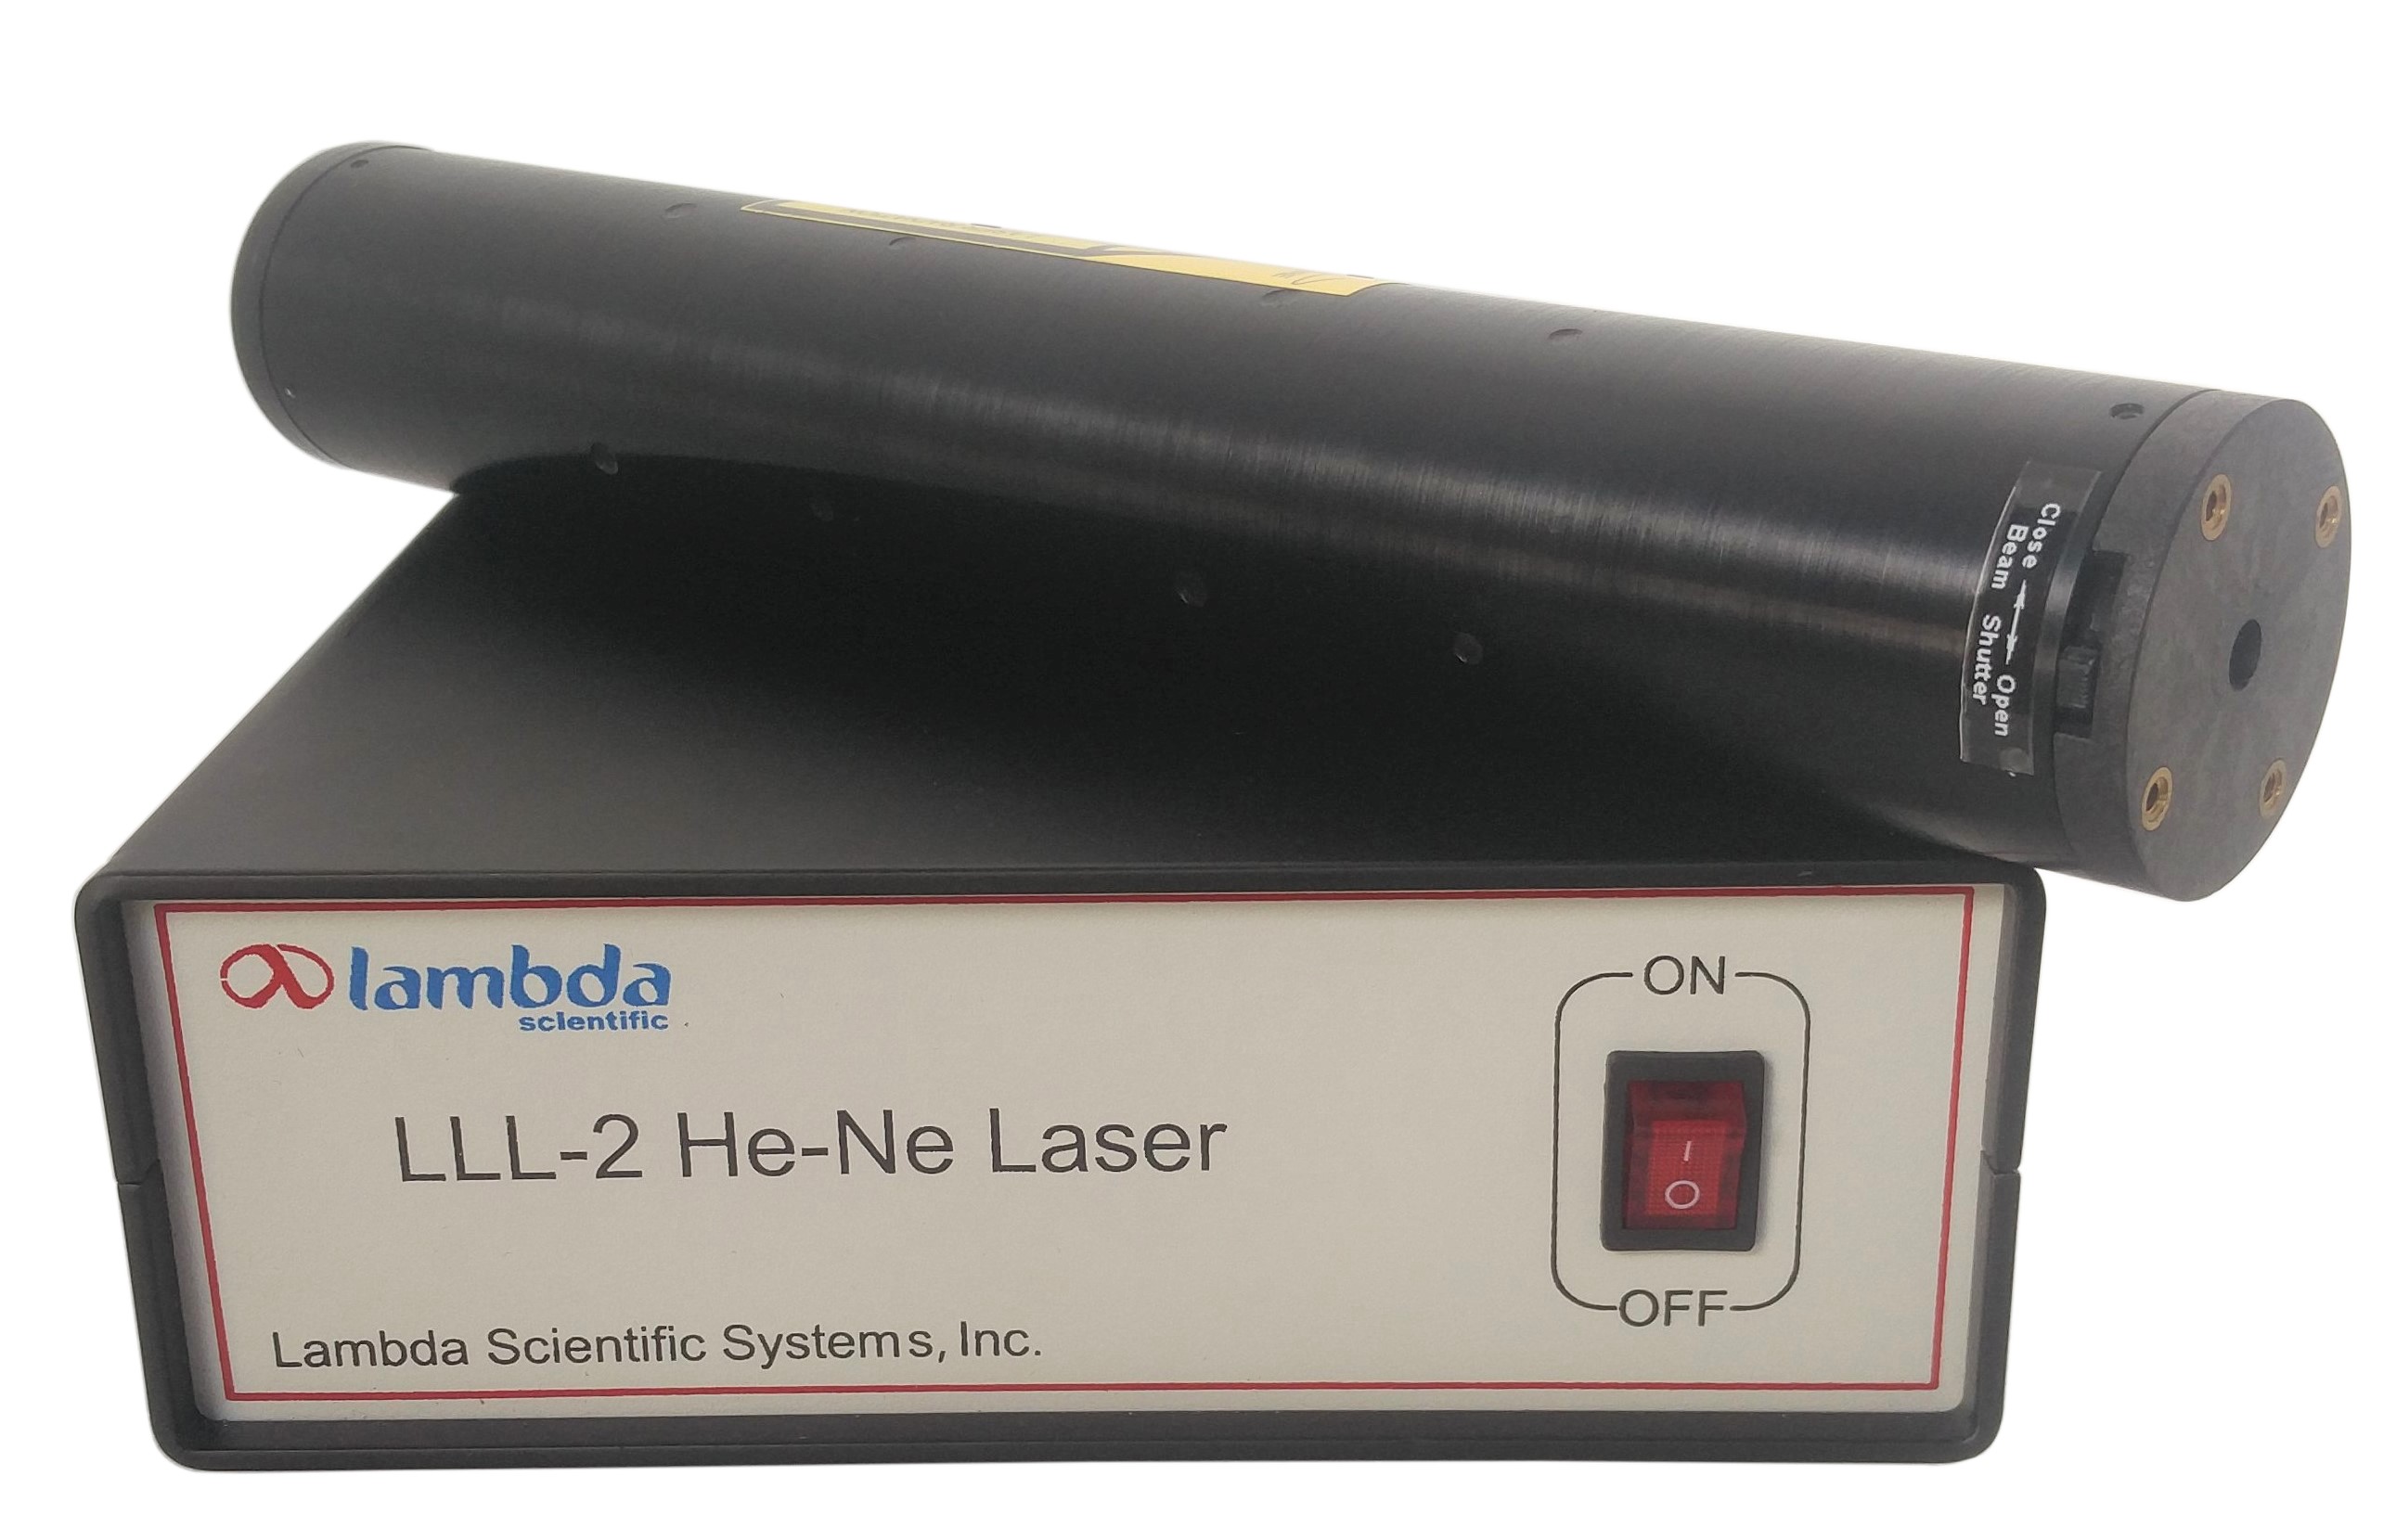 LLL-2 He-Ne Laser